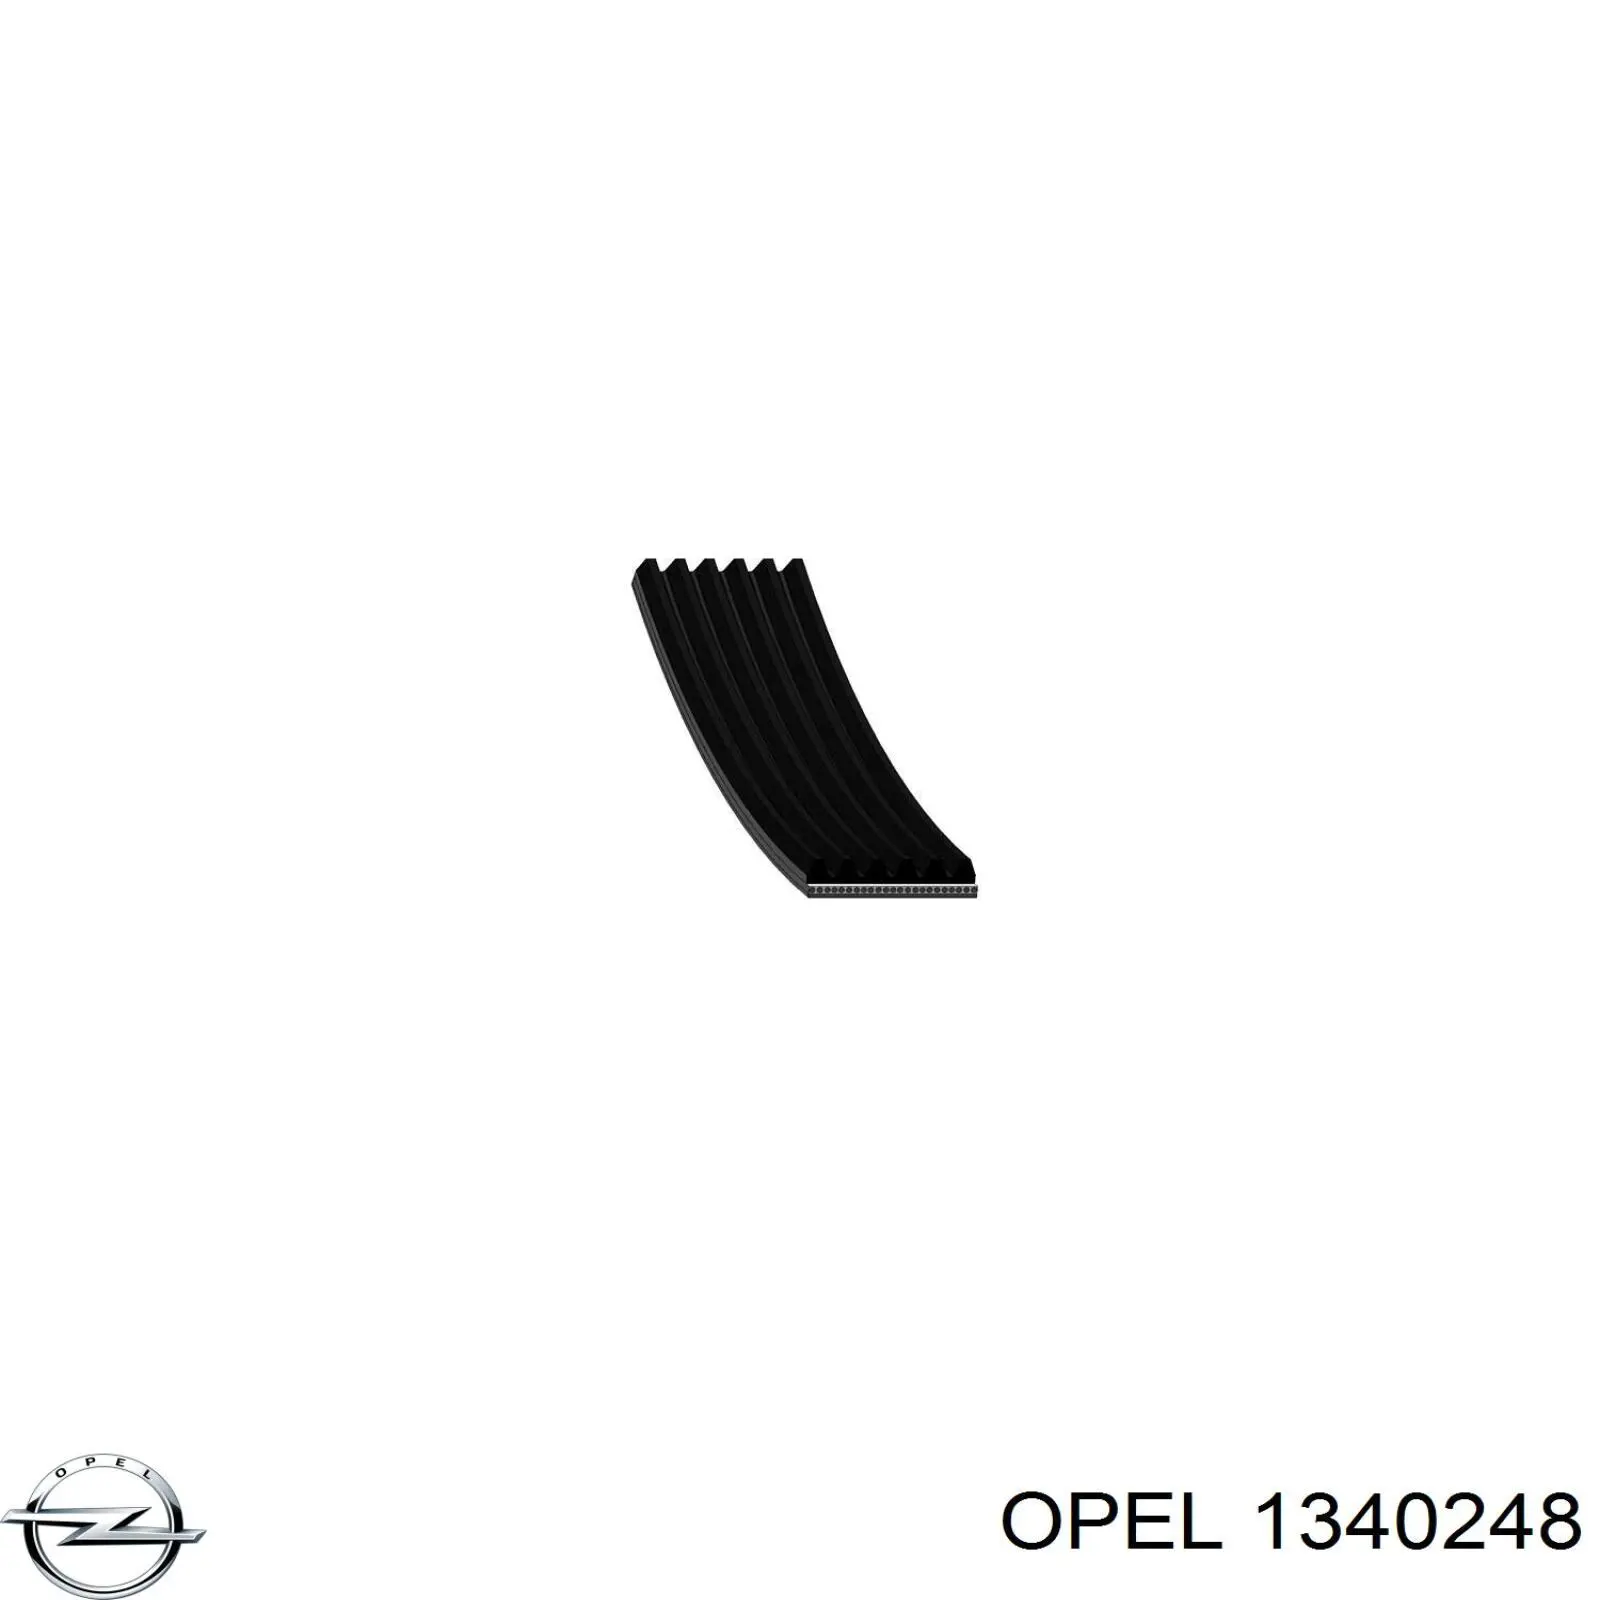 1340248 Opel correa trapezoidal